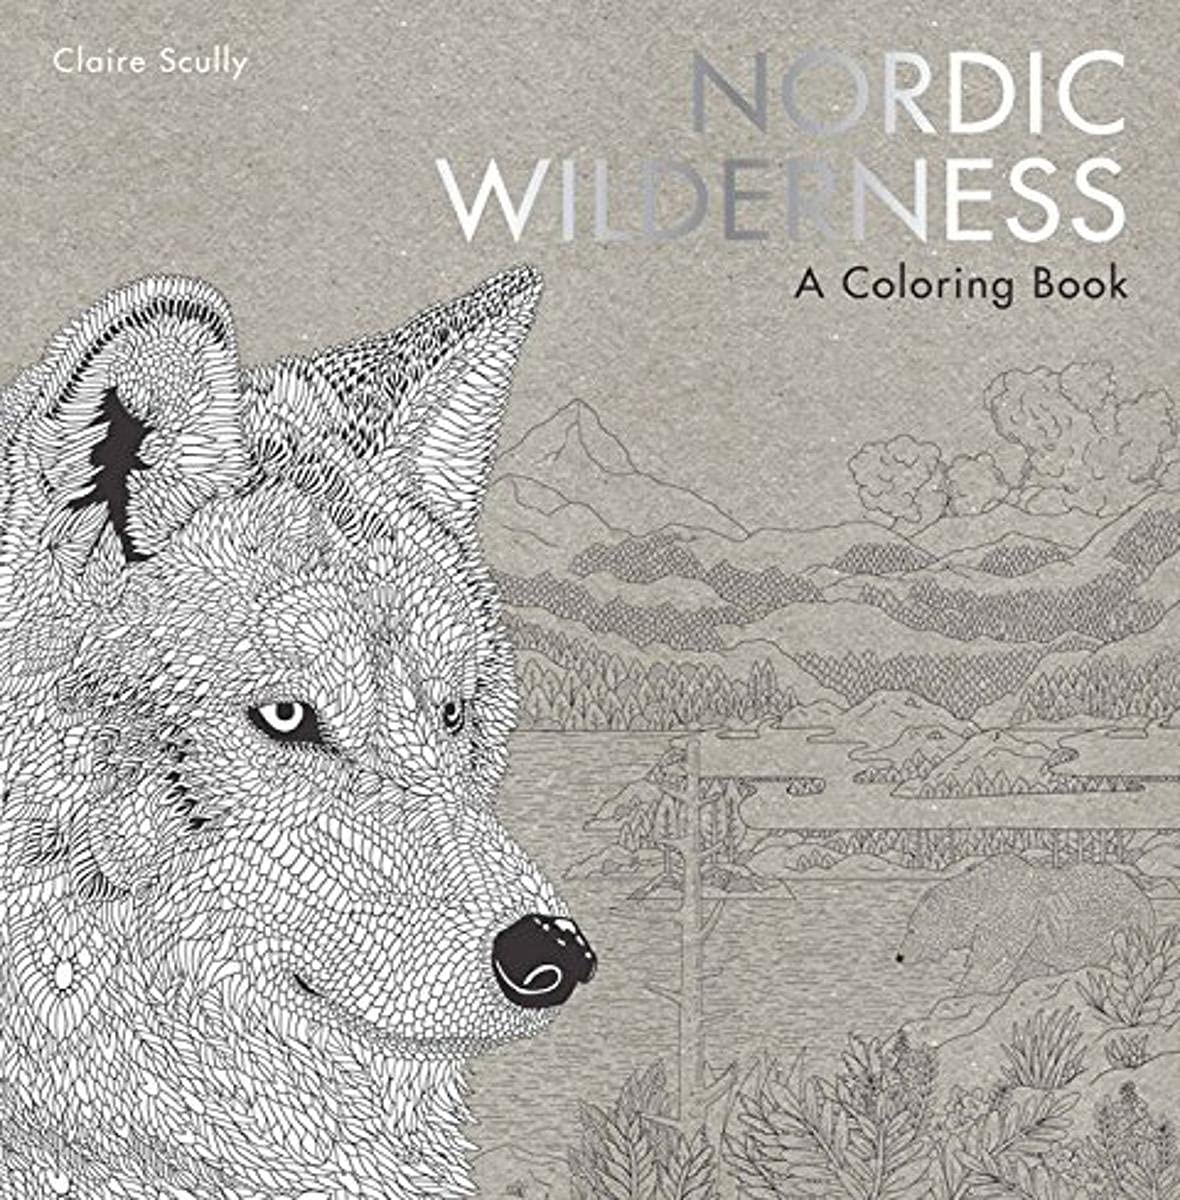 Nordic Wilderness | Coloring Book